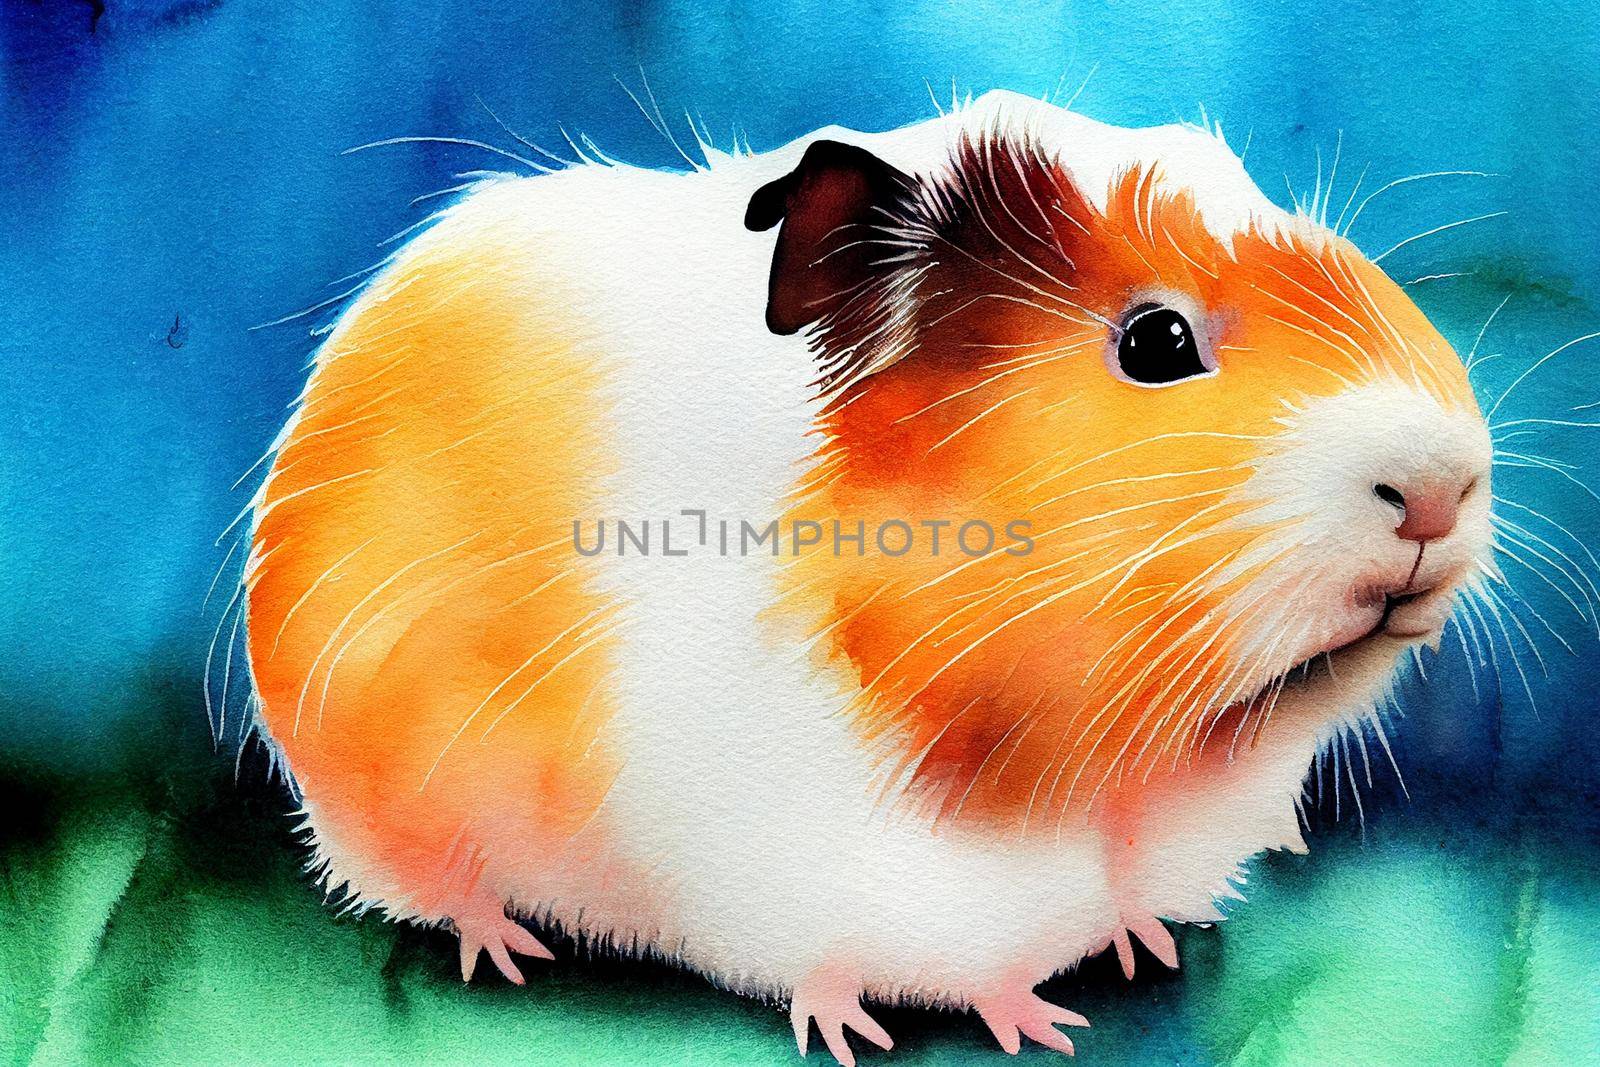 3D Render of Guinea pig digital art painting. Watercolor Animals, pastel colors.